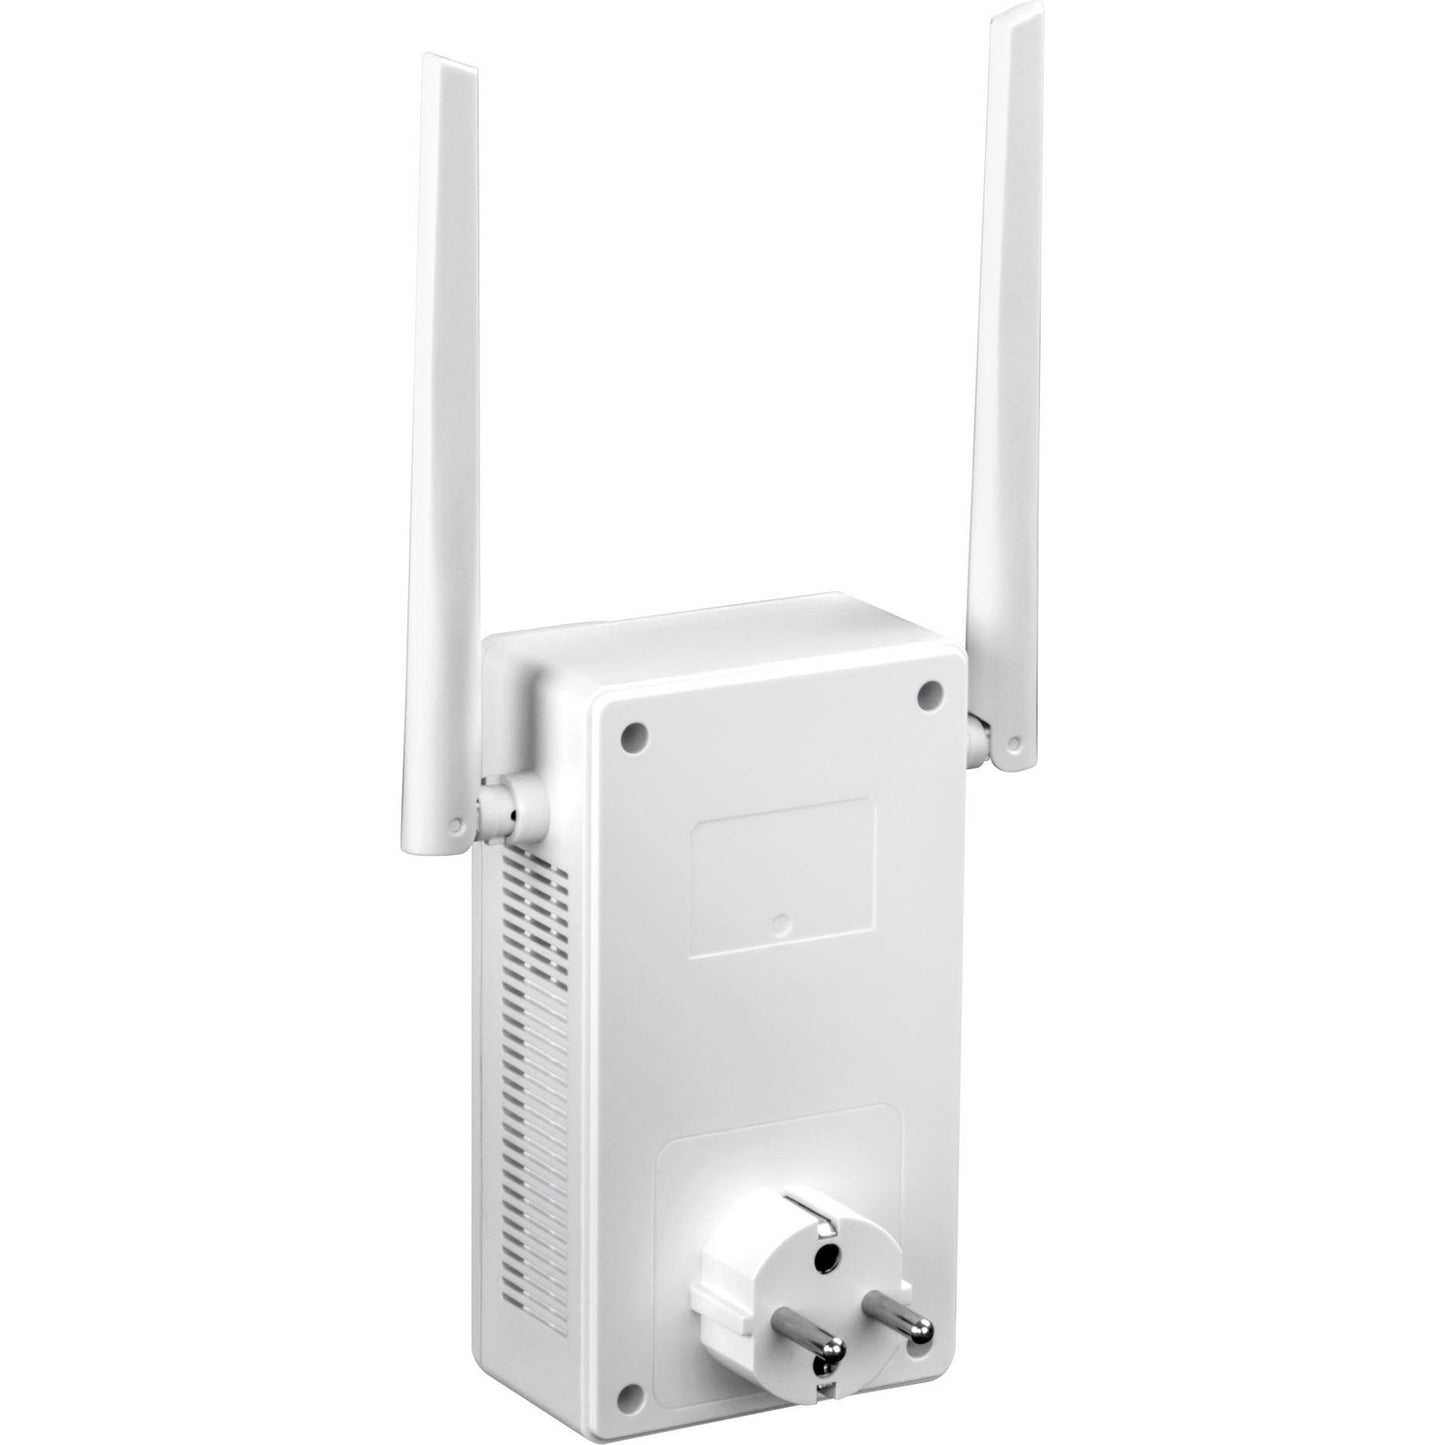 TRENDnet Wi-Fi Everywhere Powerline 1200 AV2 Dual-Band AC1200 Wireless Access Point Kit Includes 1 x TPL-430AP And 1 x TPL-423E 3 x Gigabit Ports Easy Installation White TPL-430APK